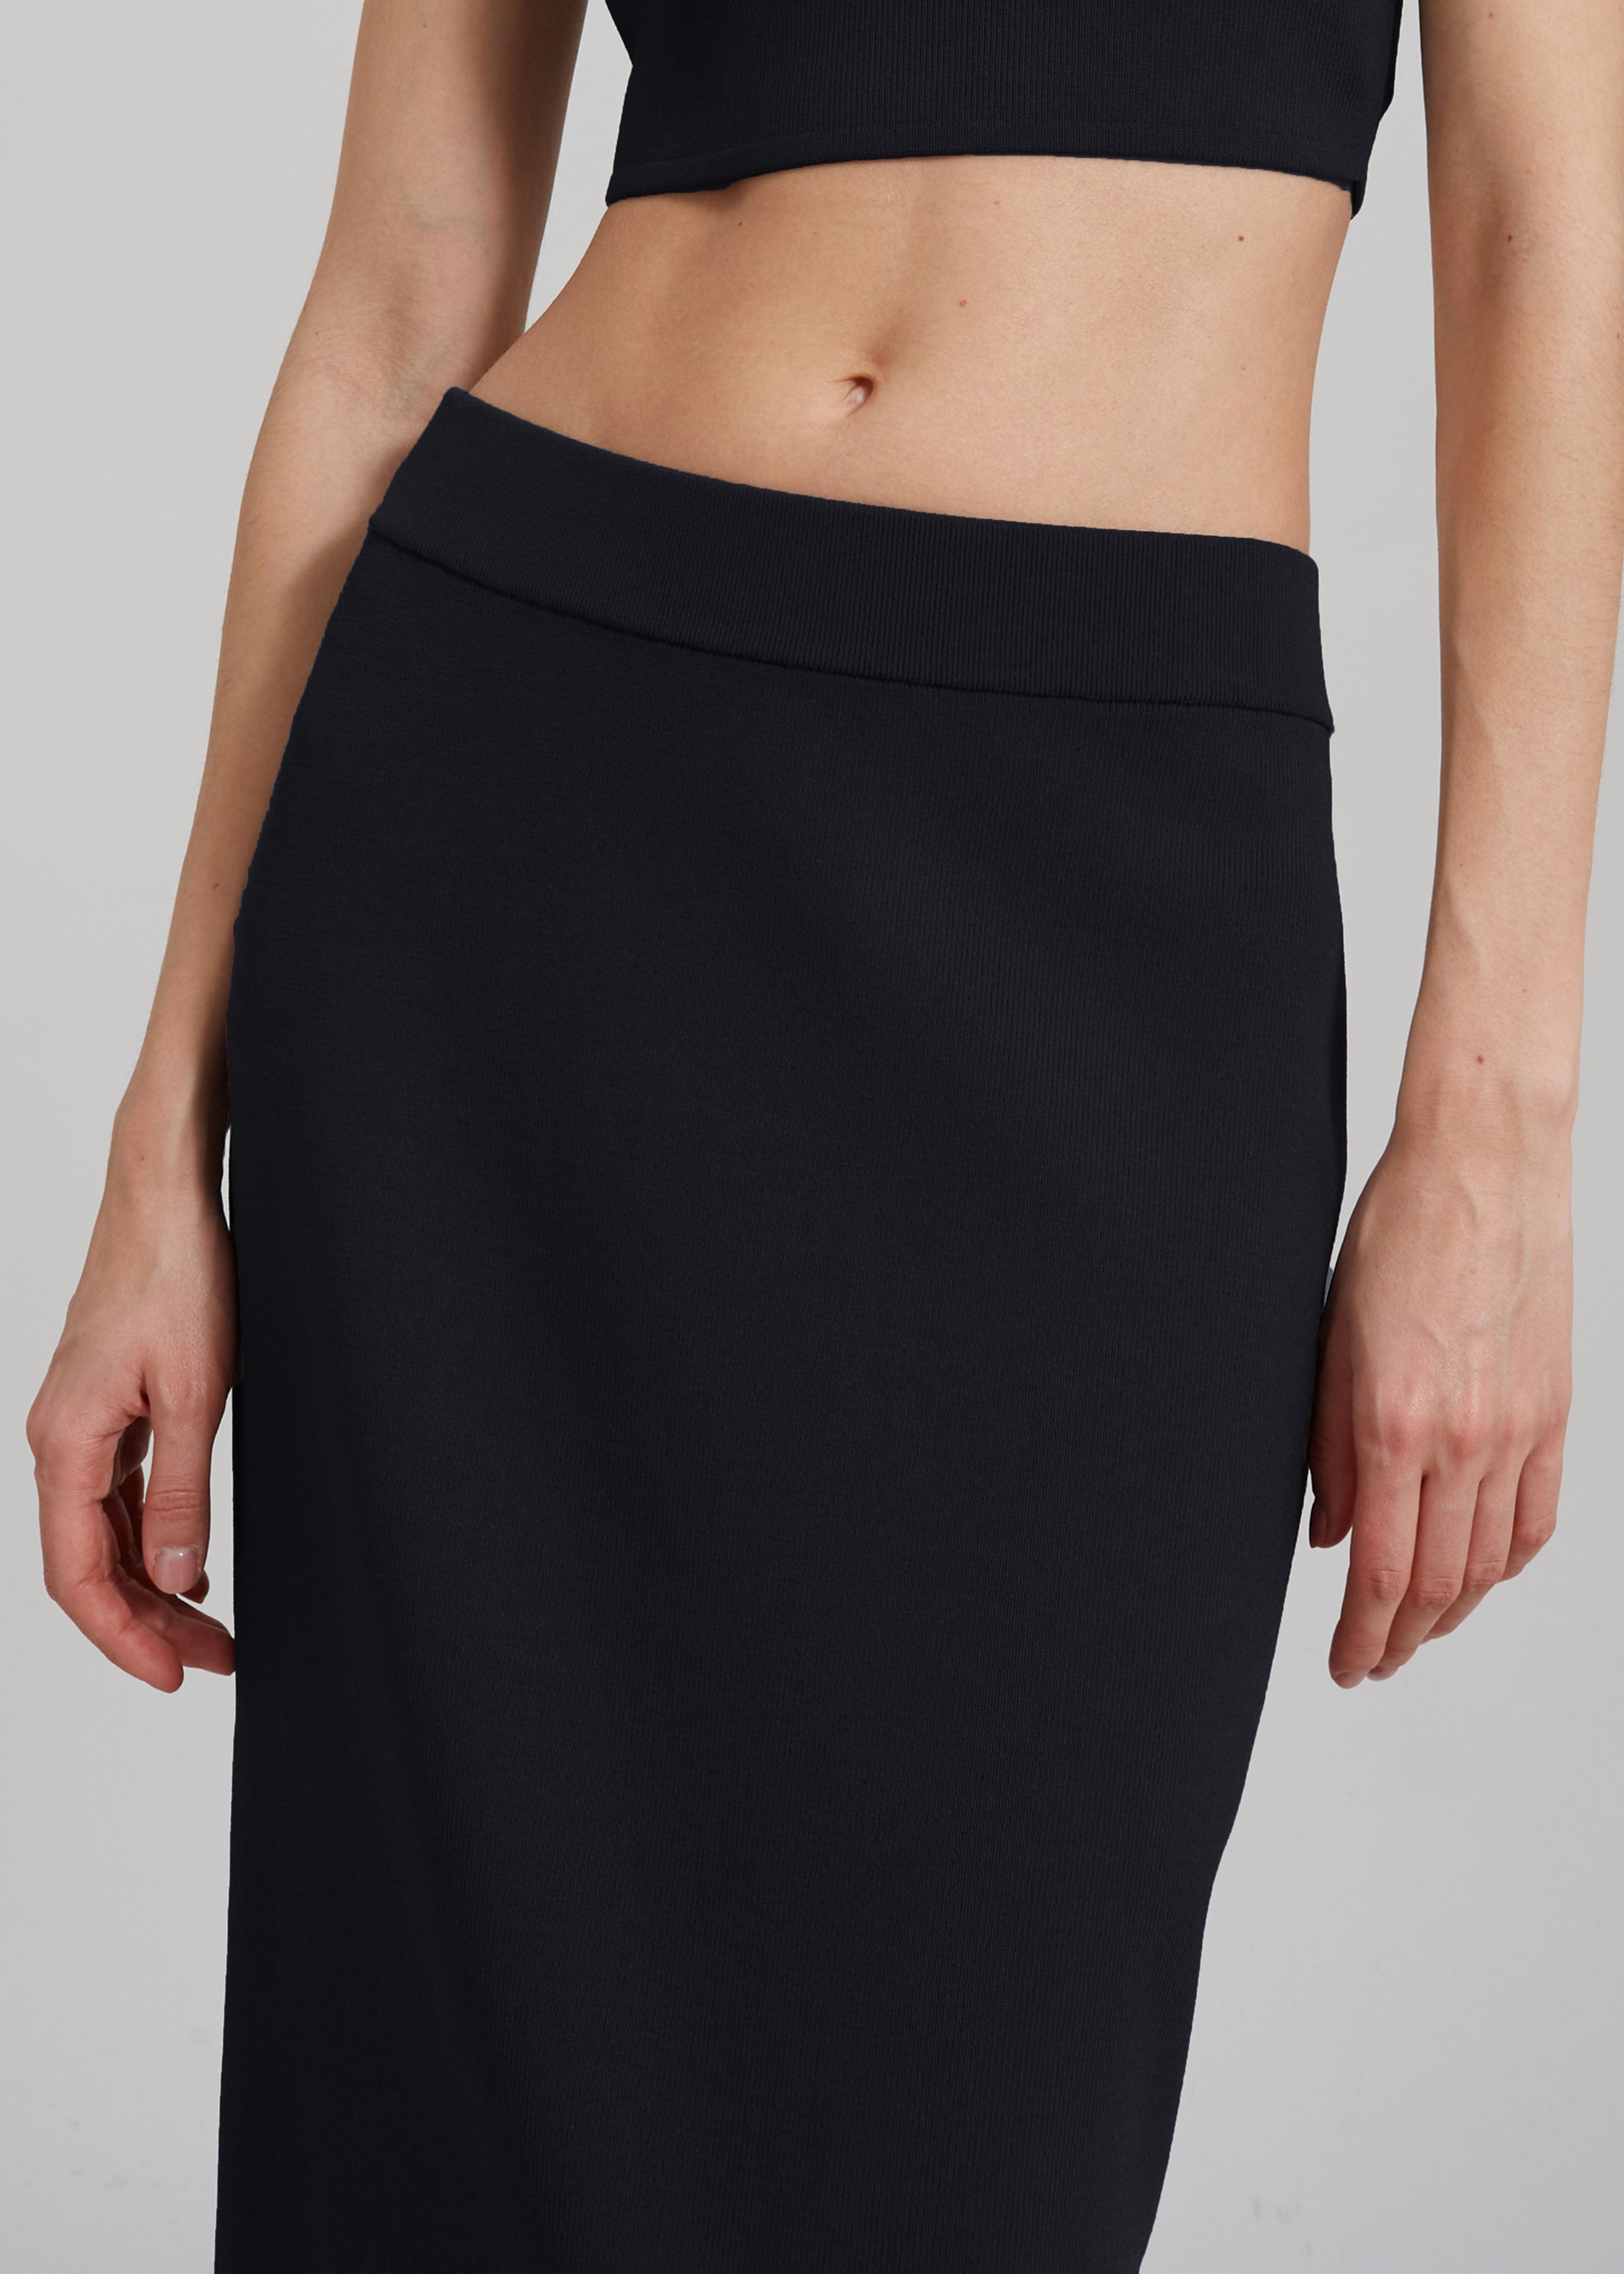 Solange Knit Pencil Skirt - Black - 3